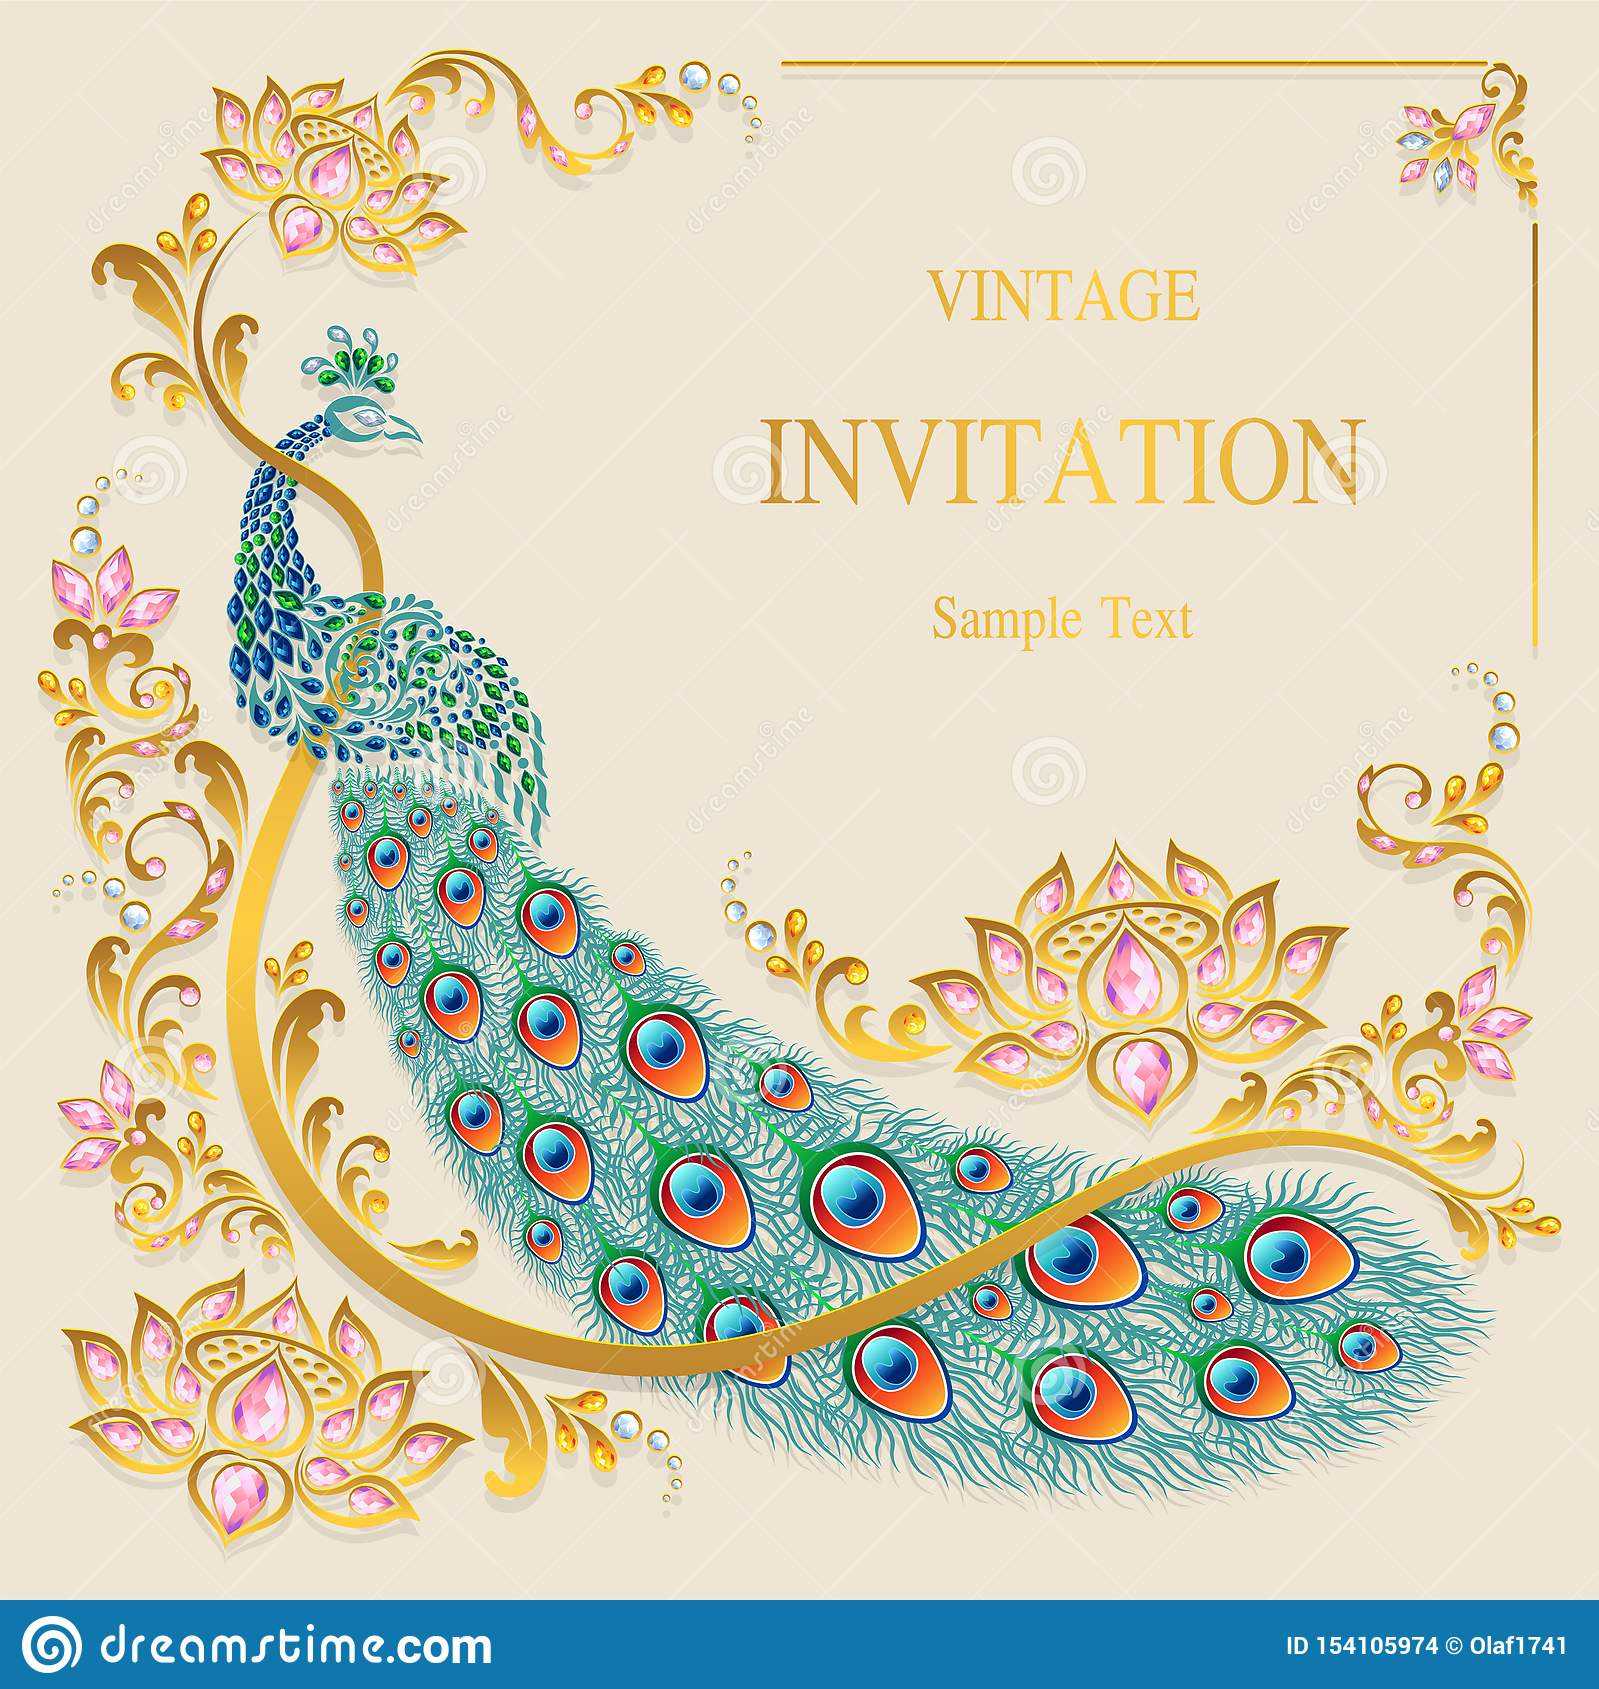 Indian Wedding Invitation Card Templates . Stock Vector With Regard To Indian Wedding Cards Design Templates